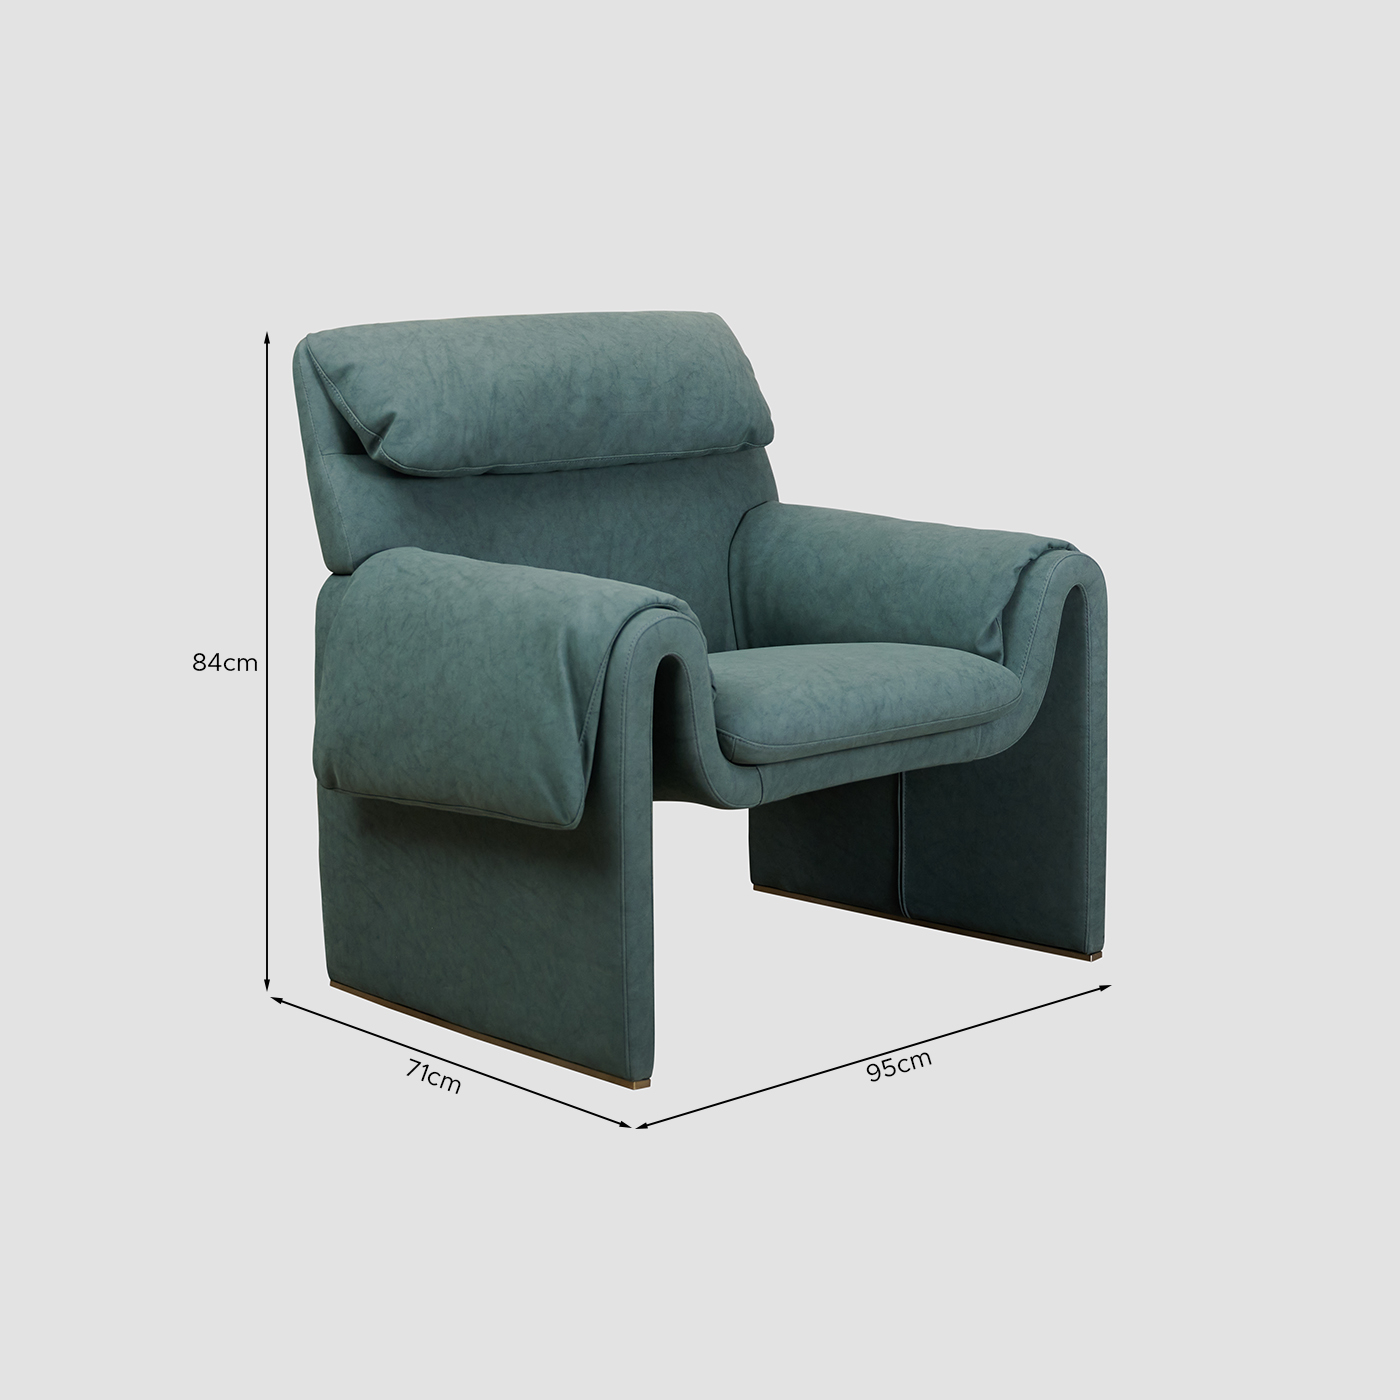 Nicollette Chair